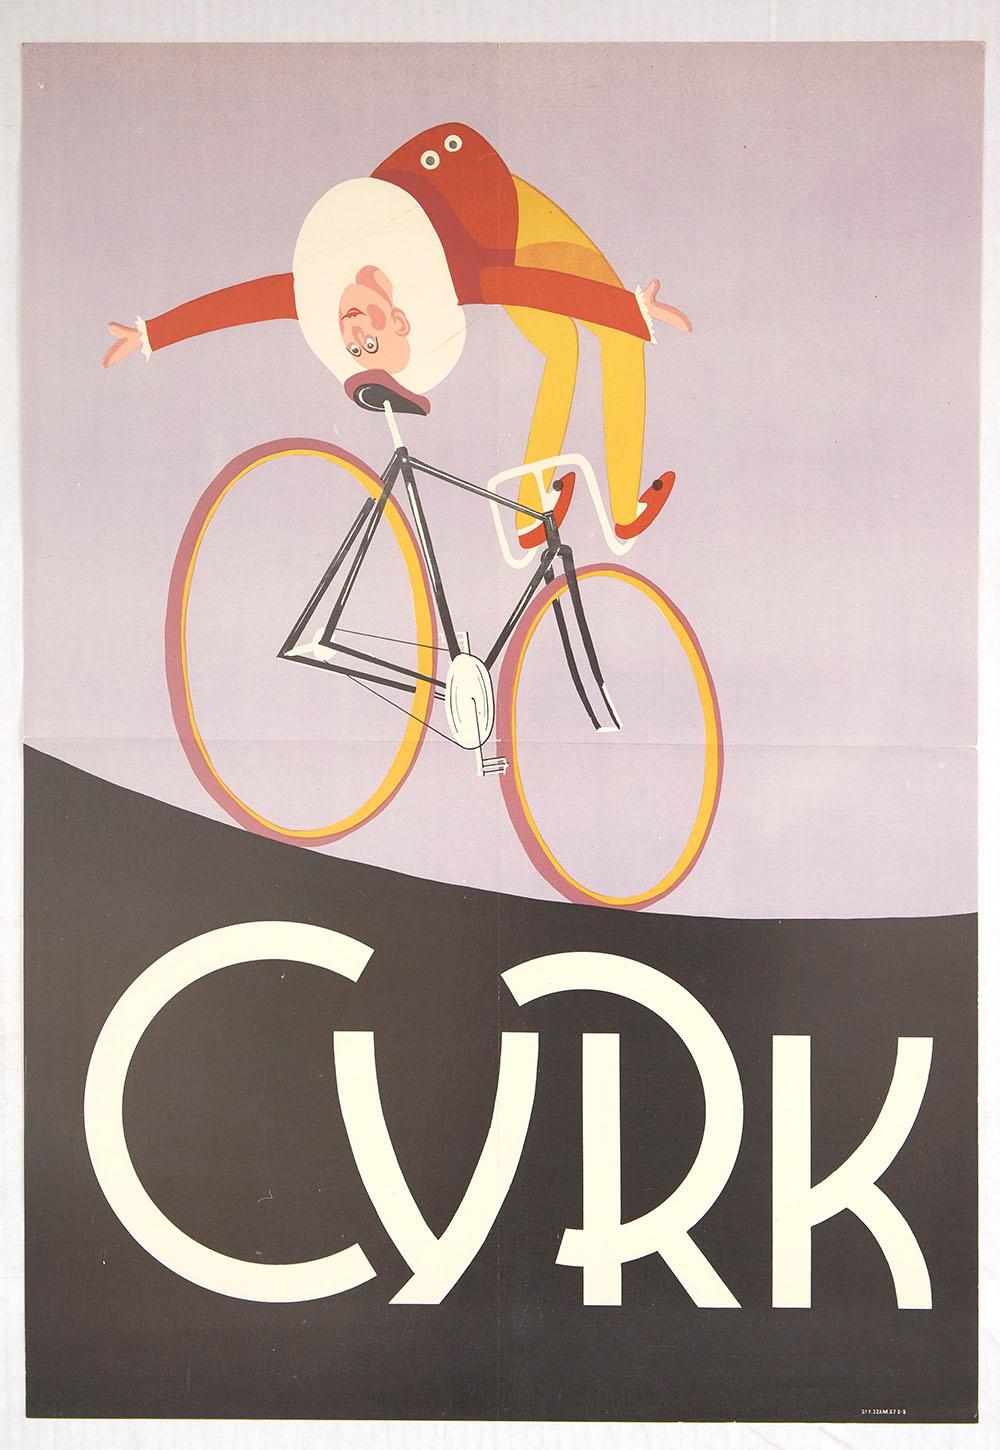 Unknown Print - Original Vintage Poster Cyrk Polish Circus Art Acrobat Clown Cyclist Bicycle Act